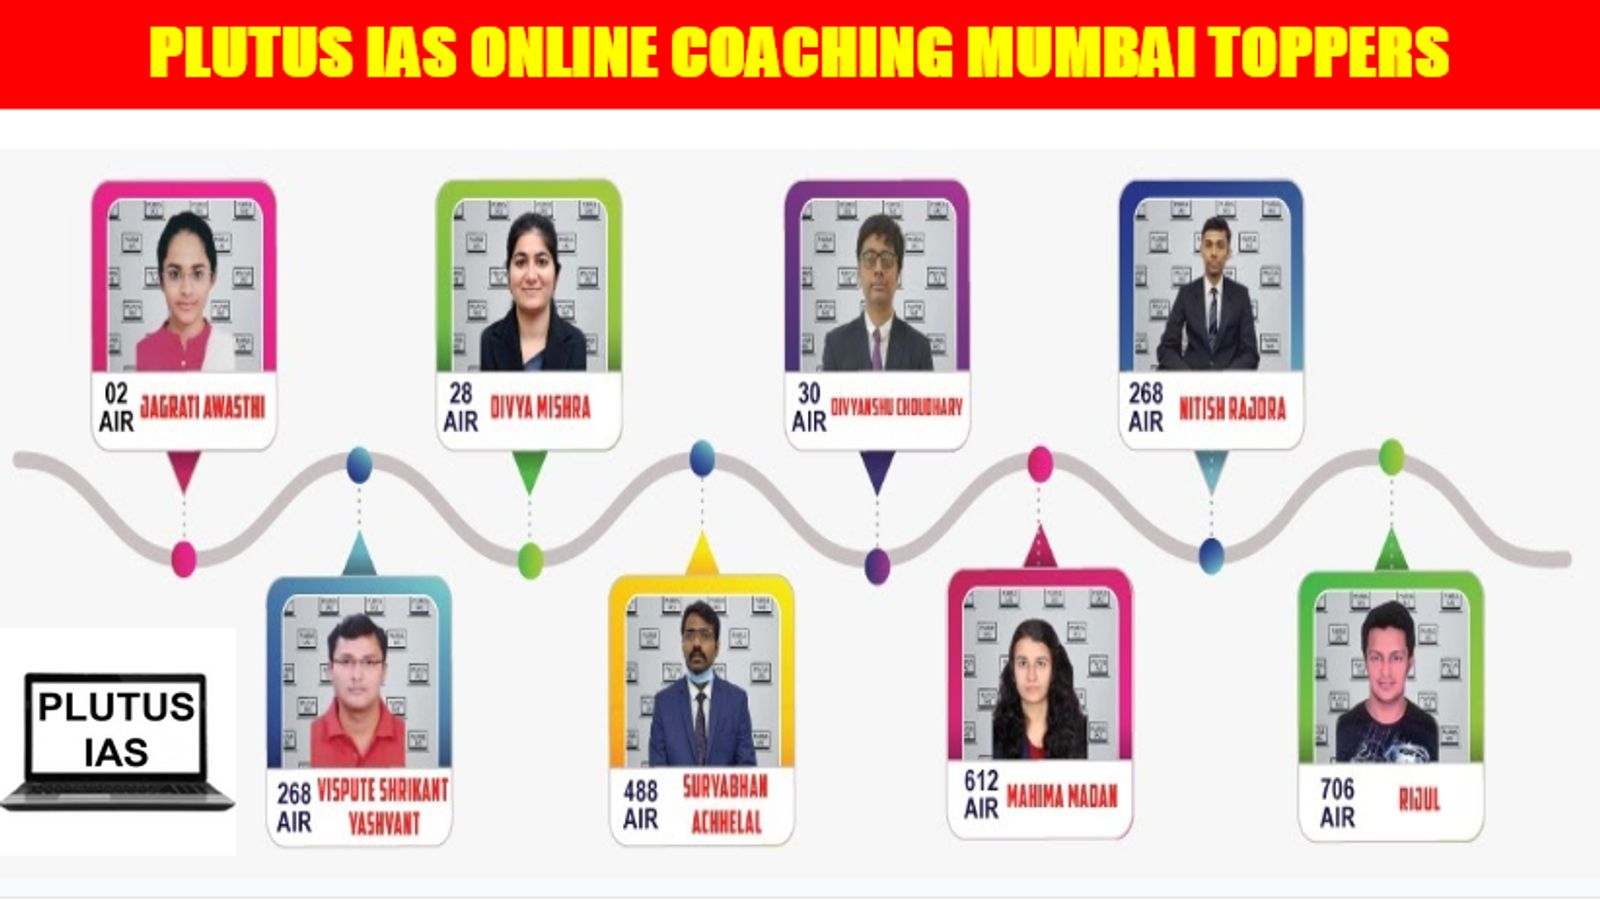 Plutus IAS Online Coaching Mumbai Toppers